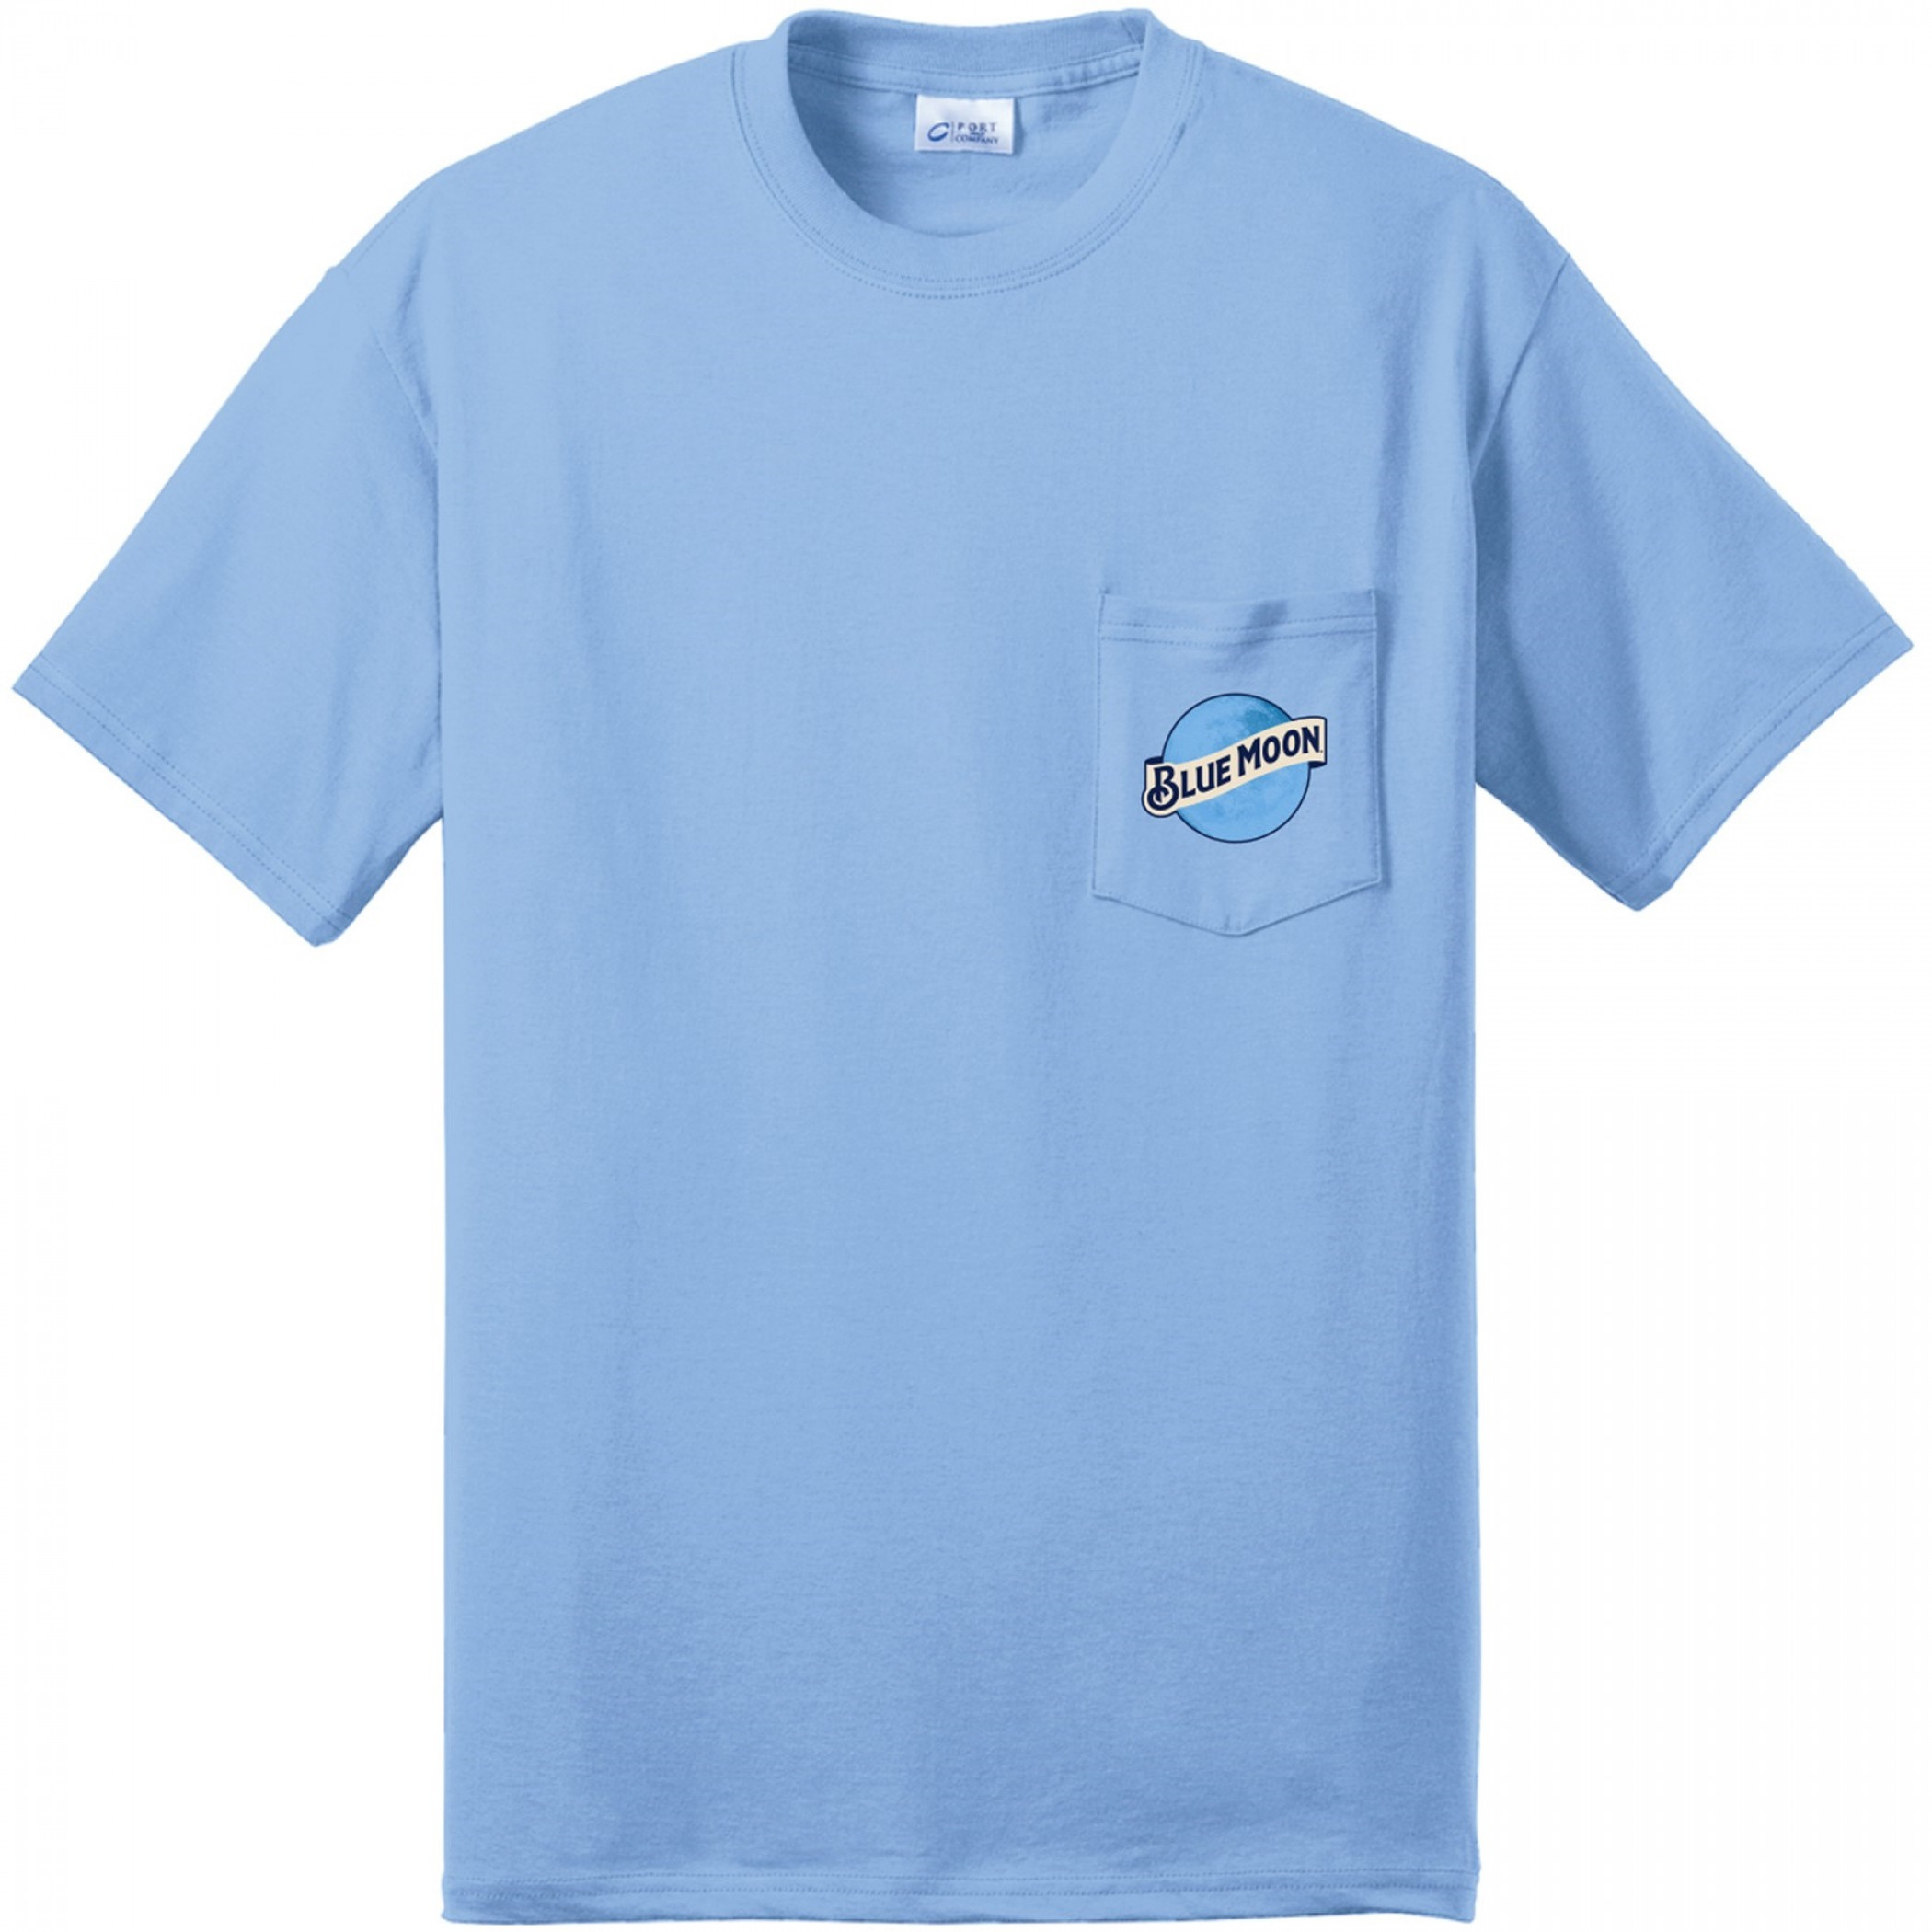 Blue Moon Front and Back Logo Printed Pocket T-Shirt